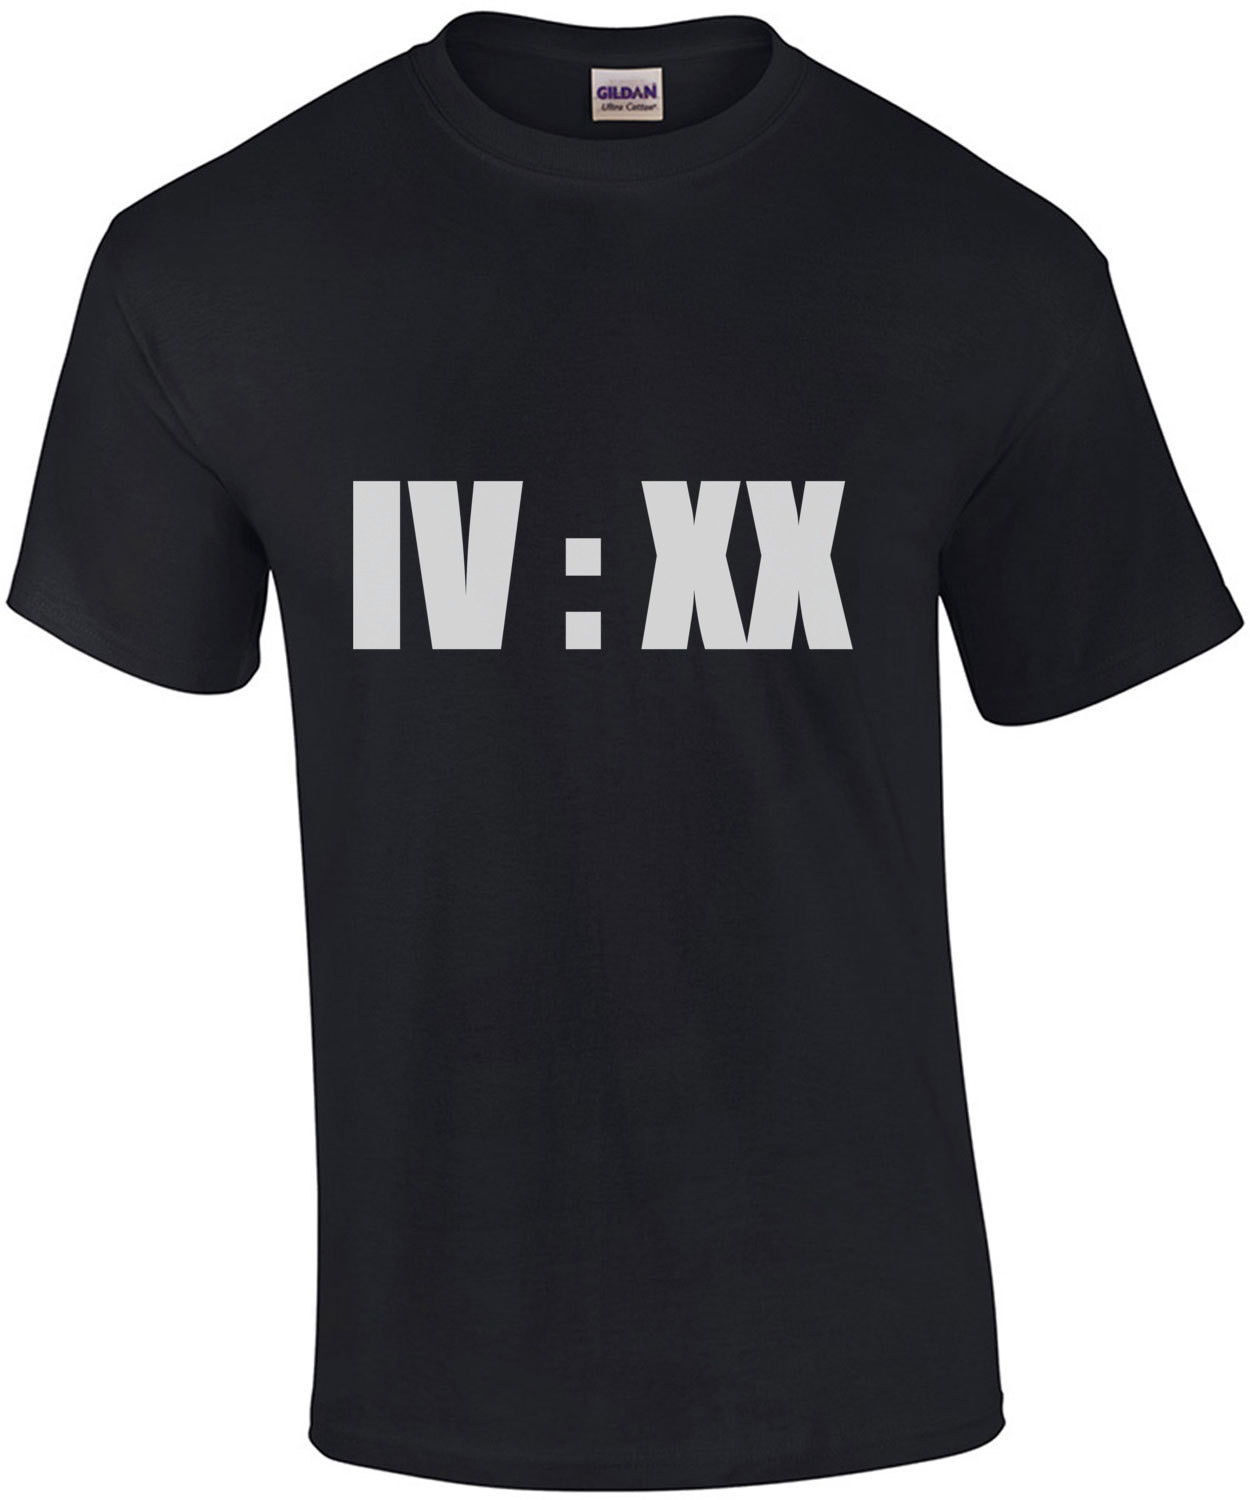 IV : XX 420 weed marijuana t-shirt